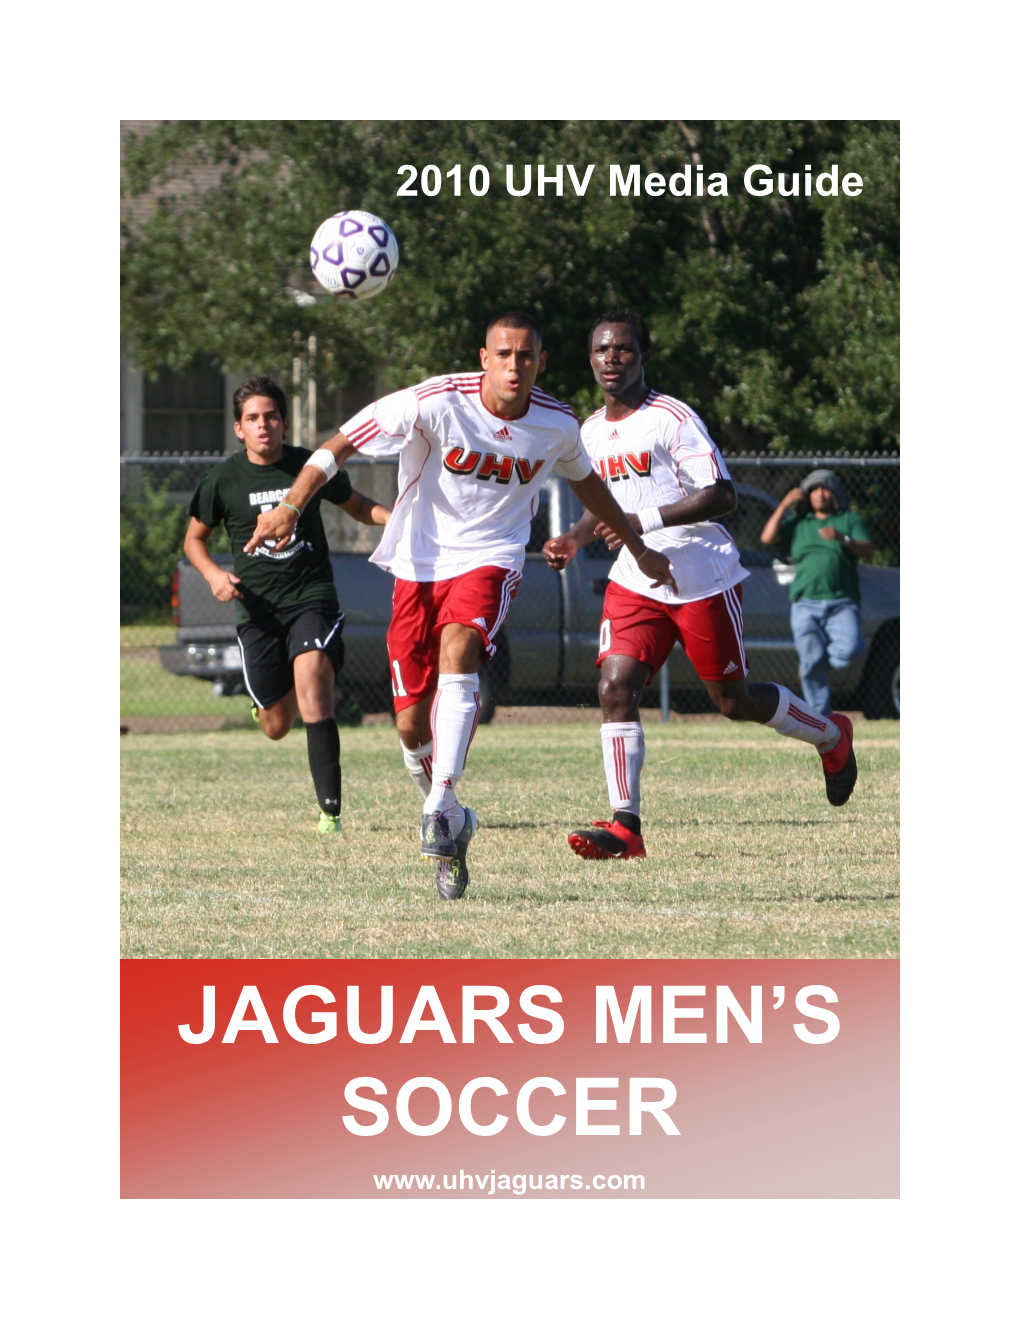 Jaguars Men's Soccer